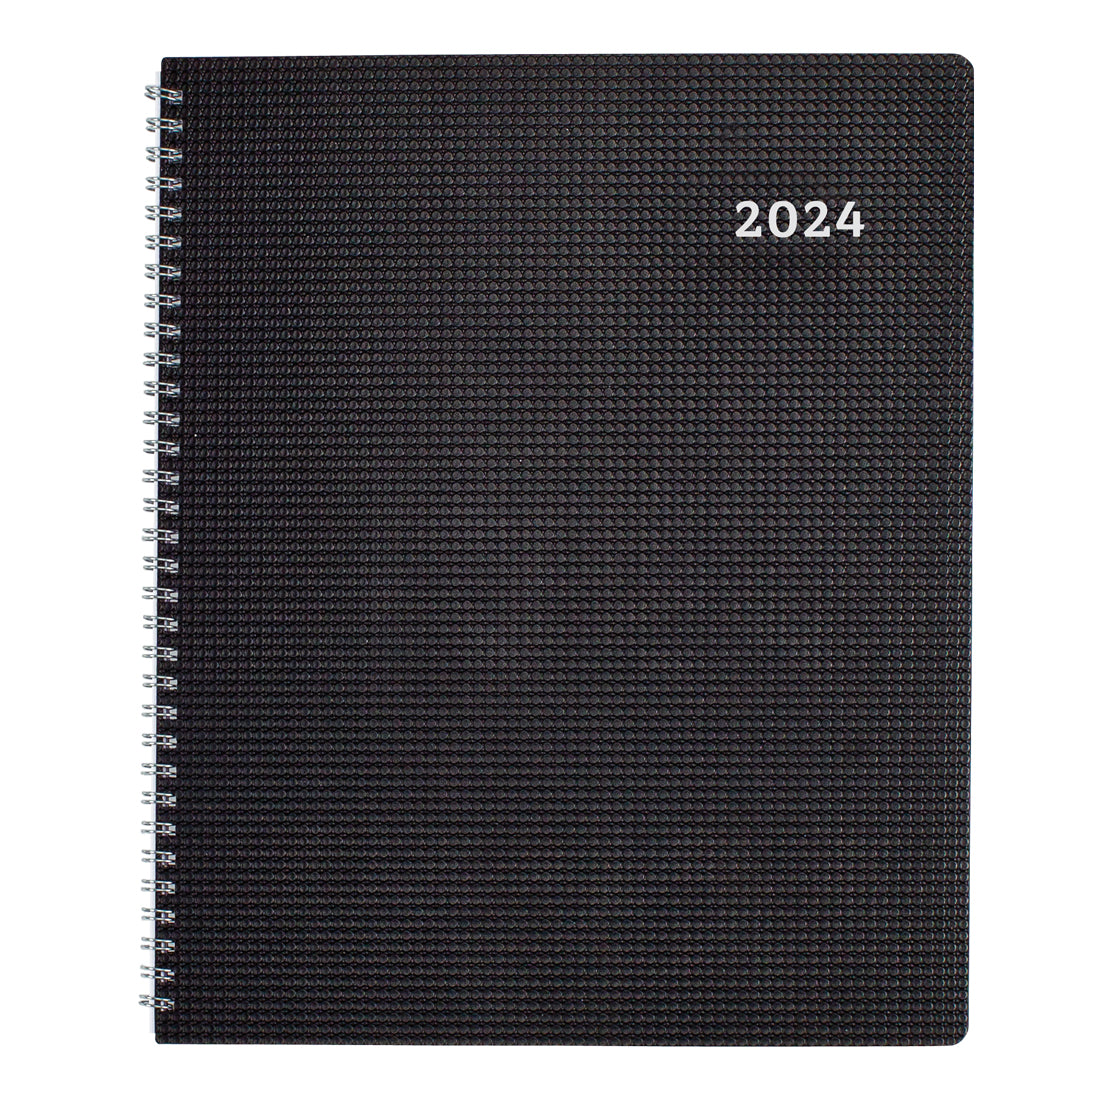 Essential Weekly Planner 2024, Bilingual, Black - C5950V.81BT